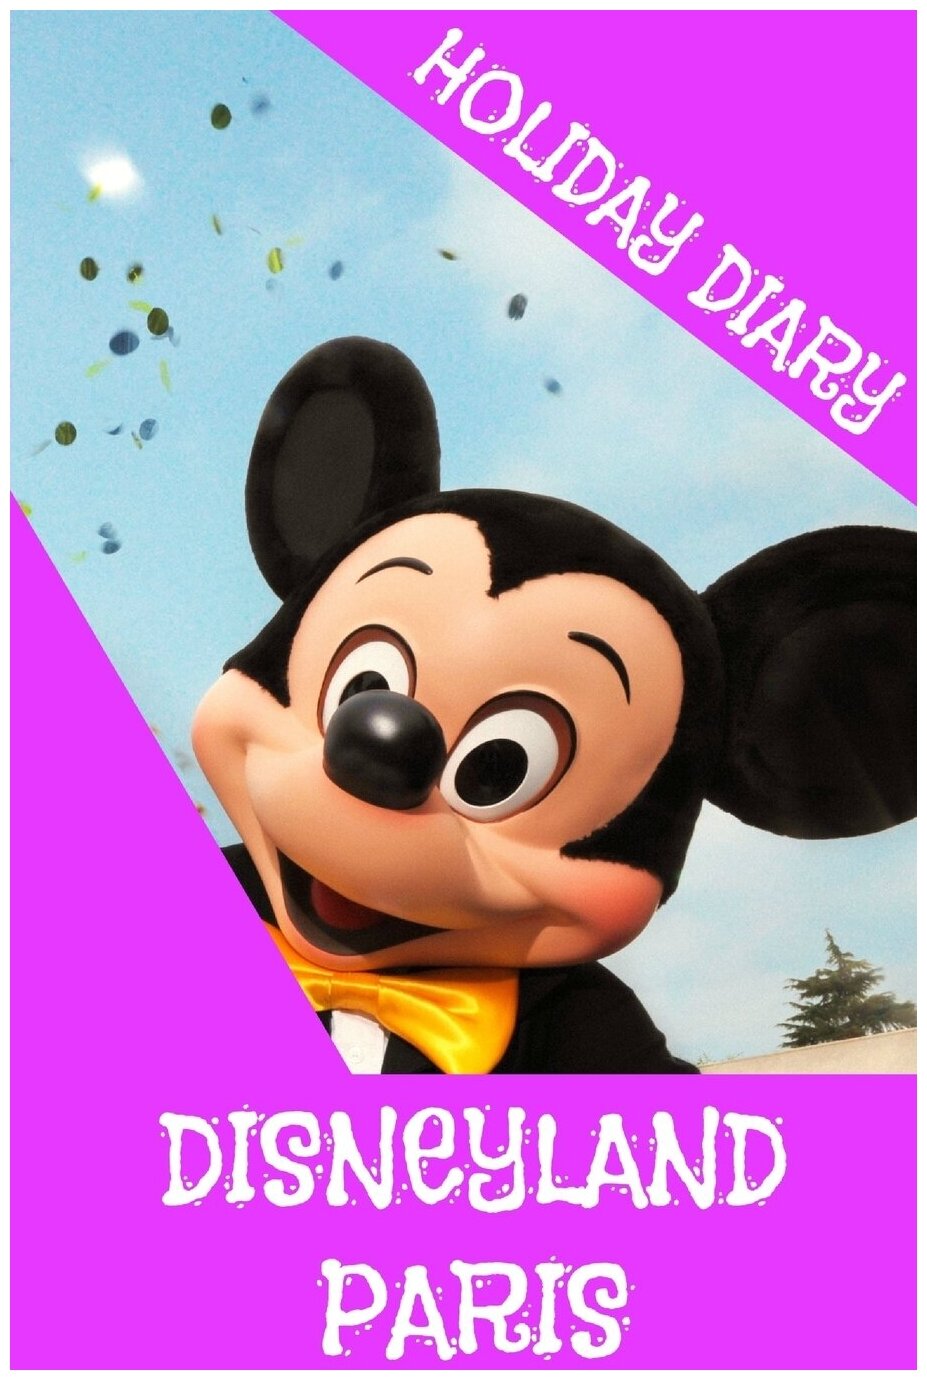 Holiday Diary Disneyland Paris - Girls Edition